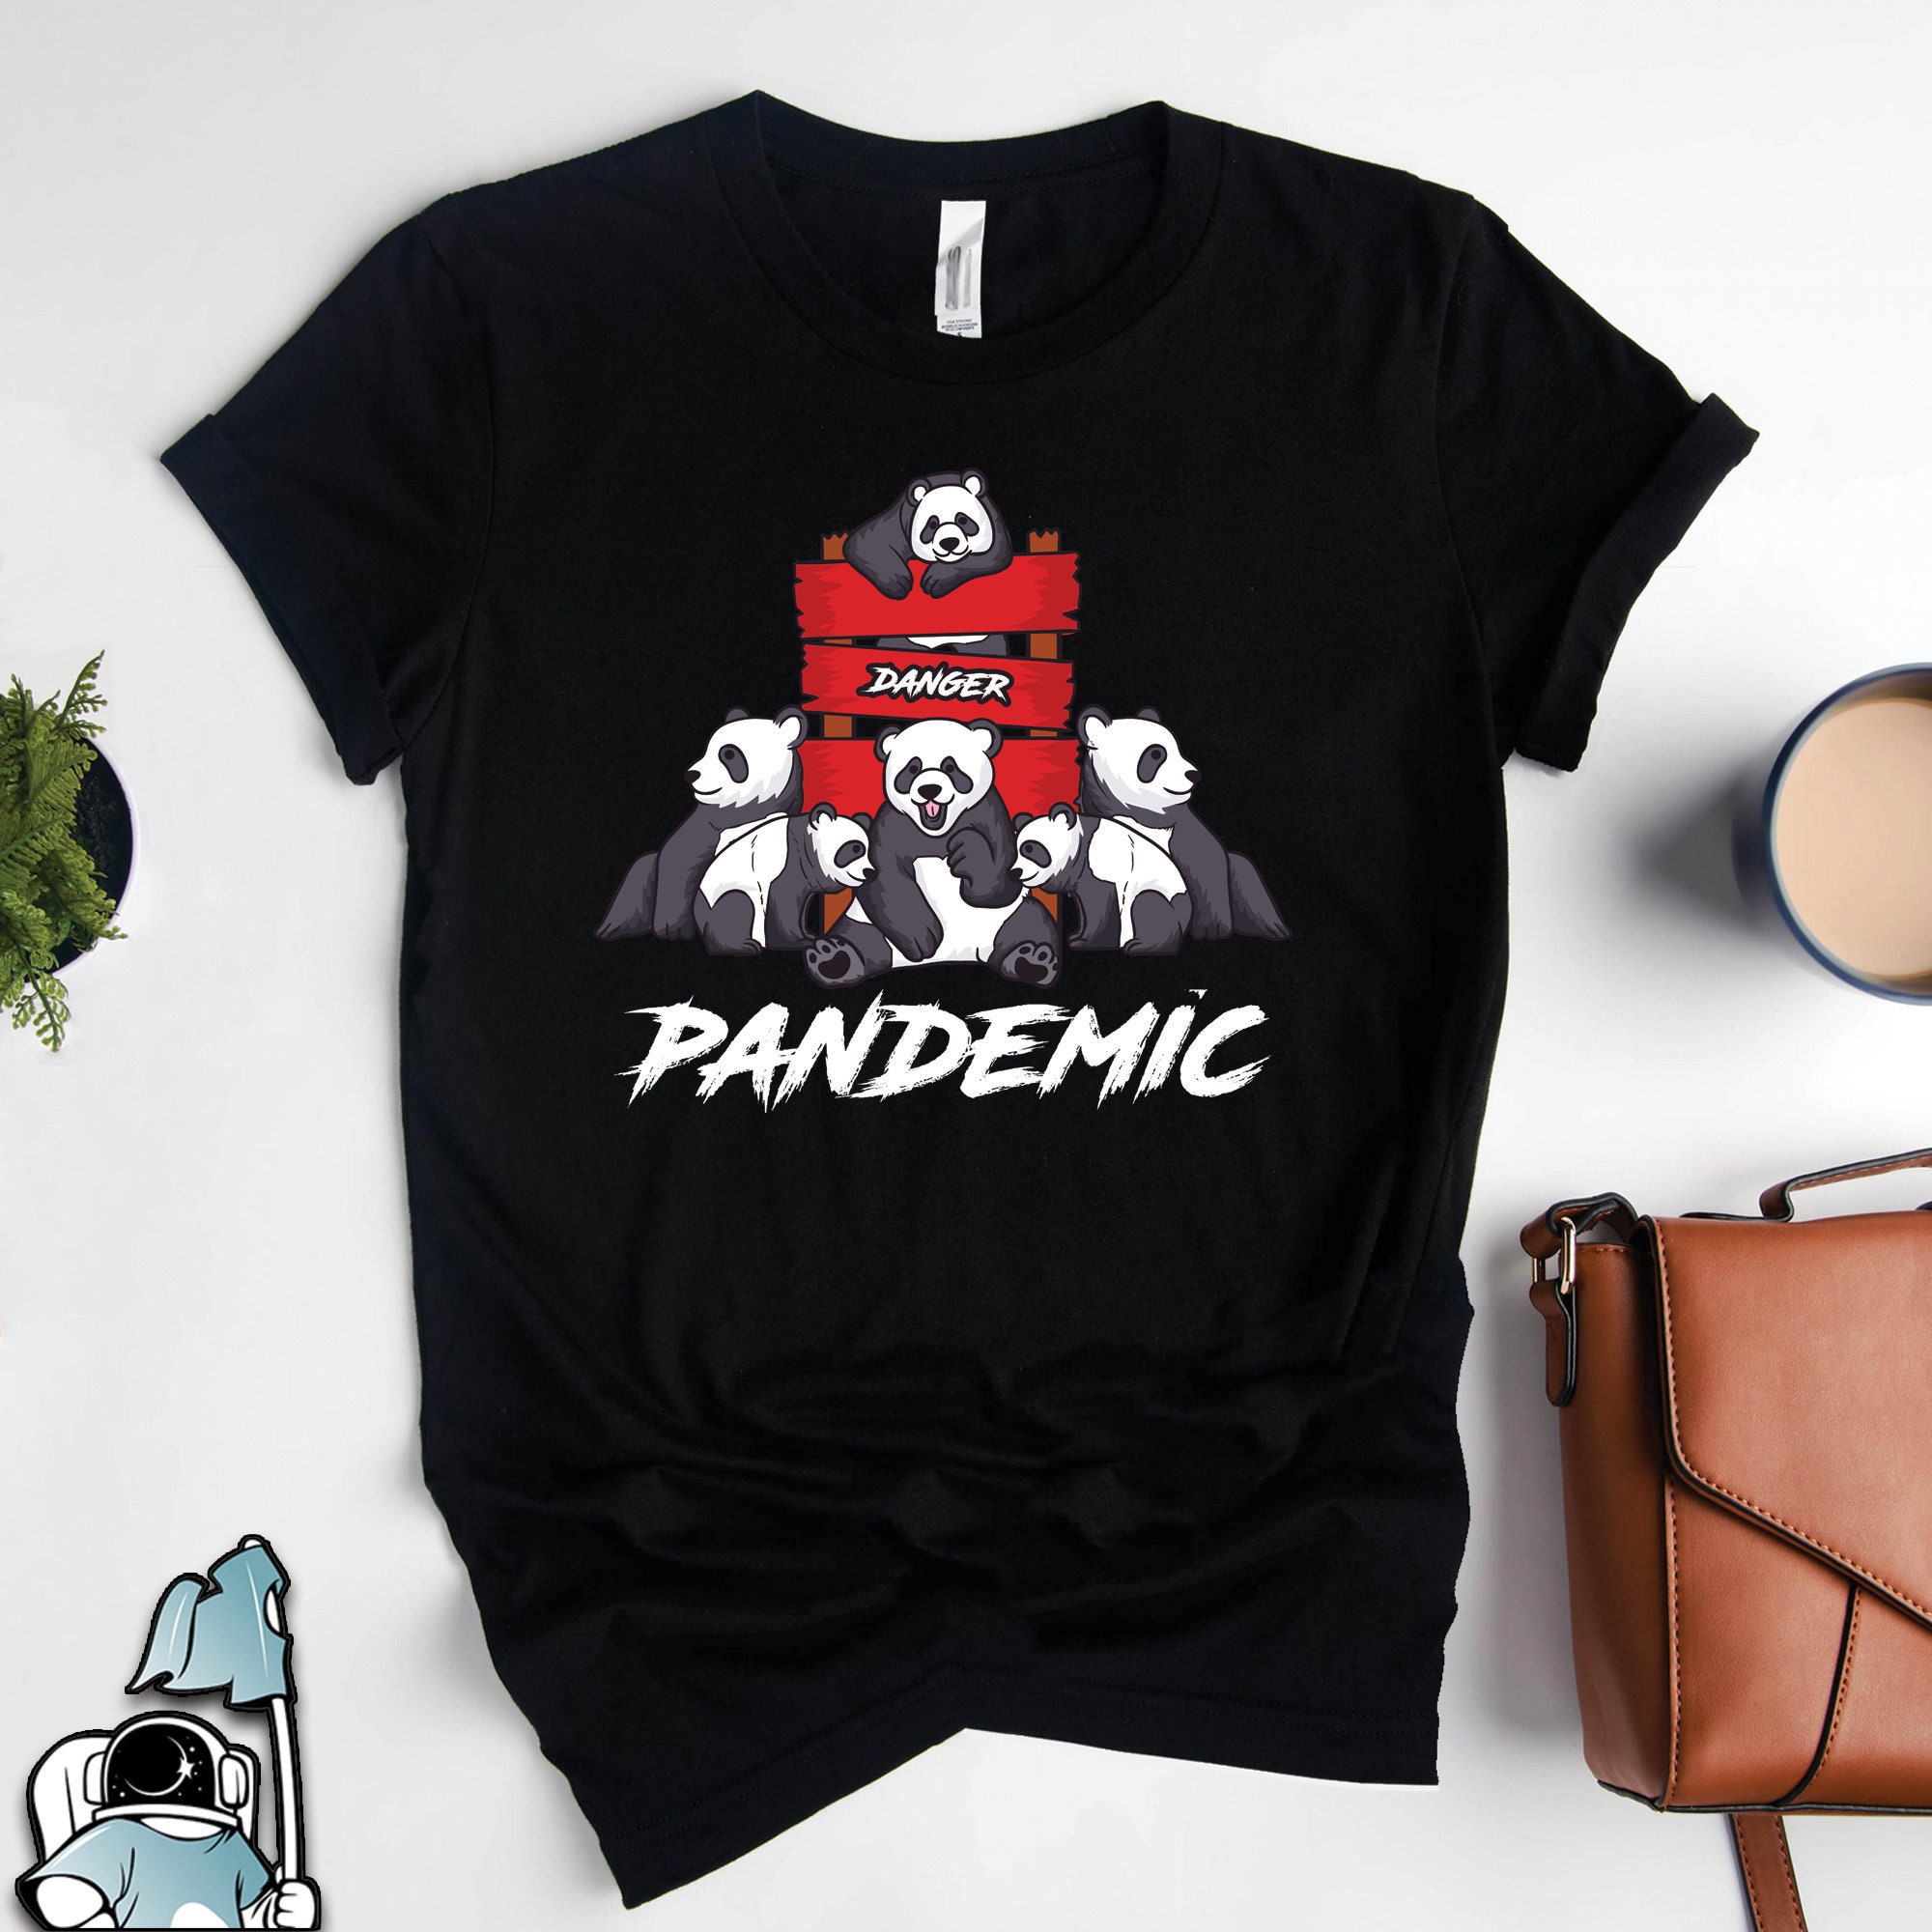 Panda Bear Wizard Cartoon T-shirt Design Vector Download